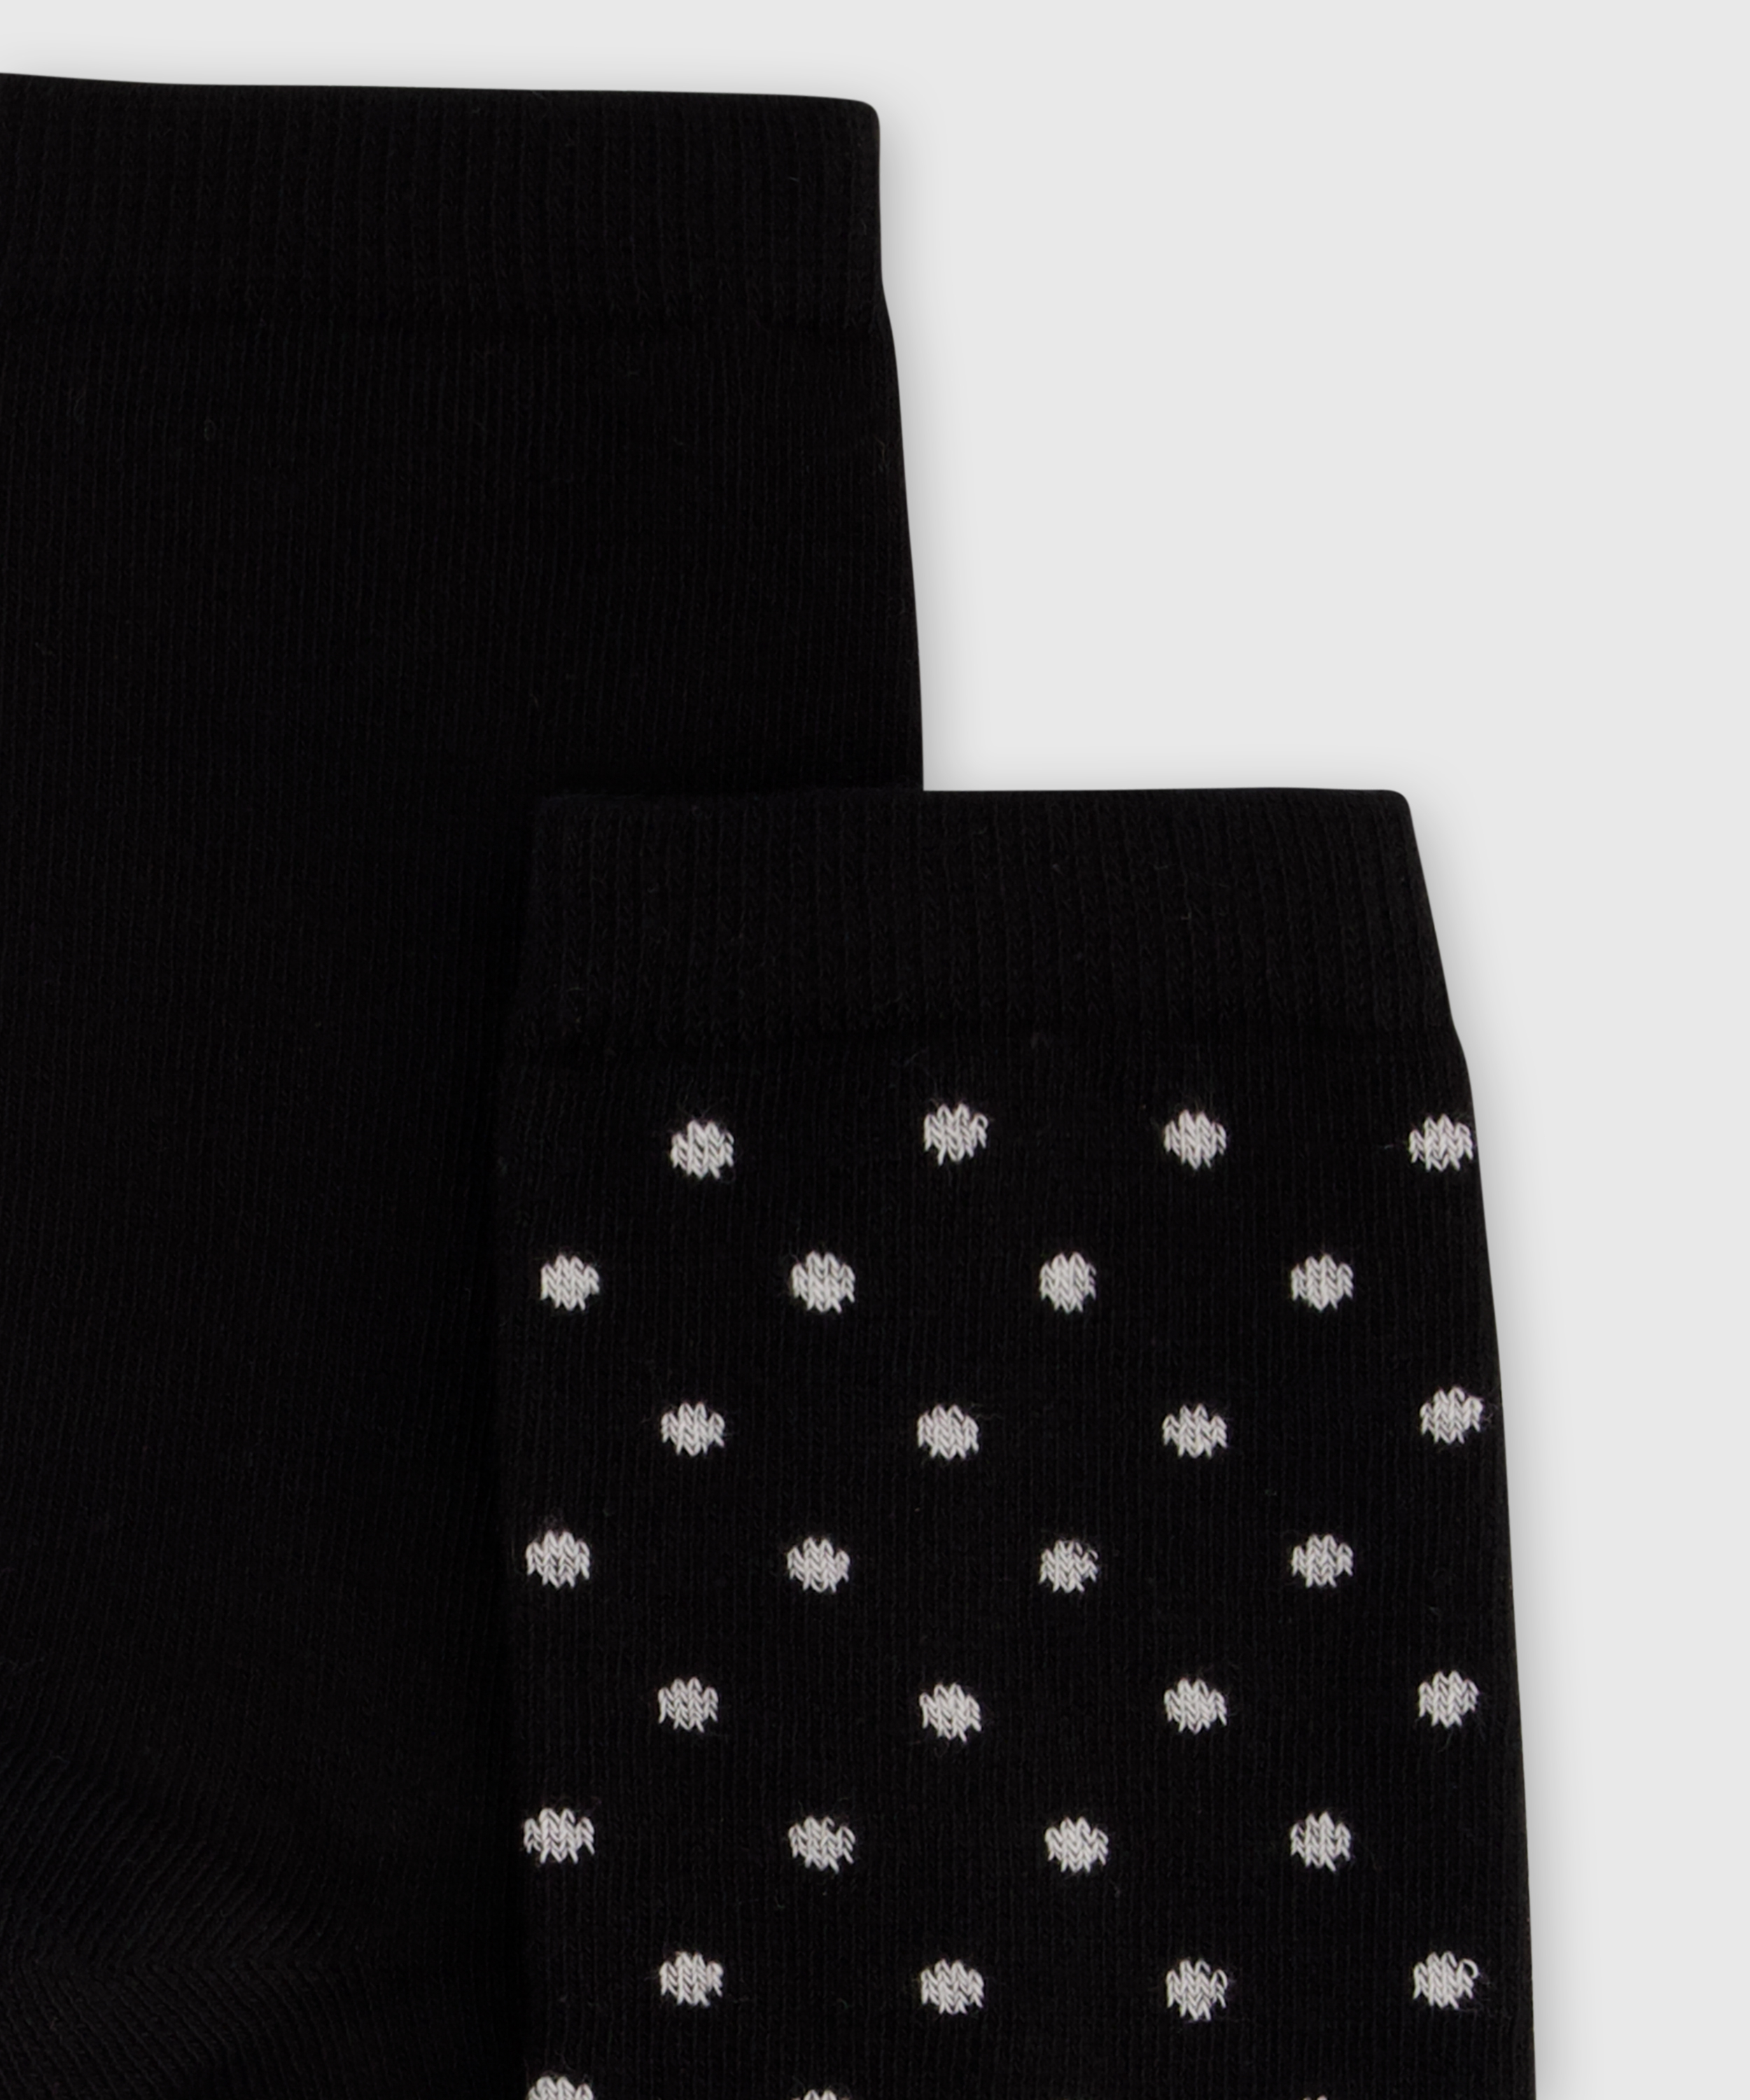 2 pairs of polka socks, Black, main